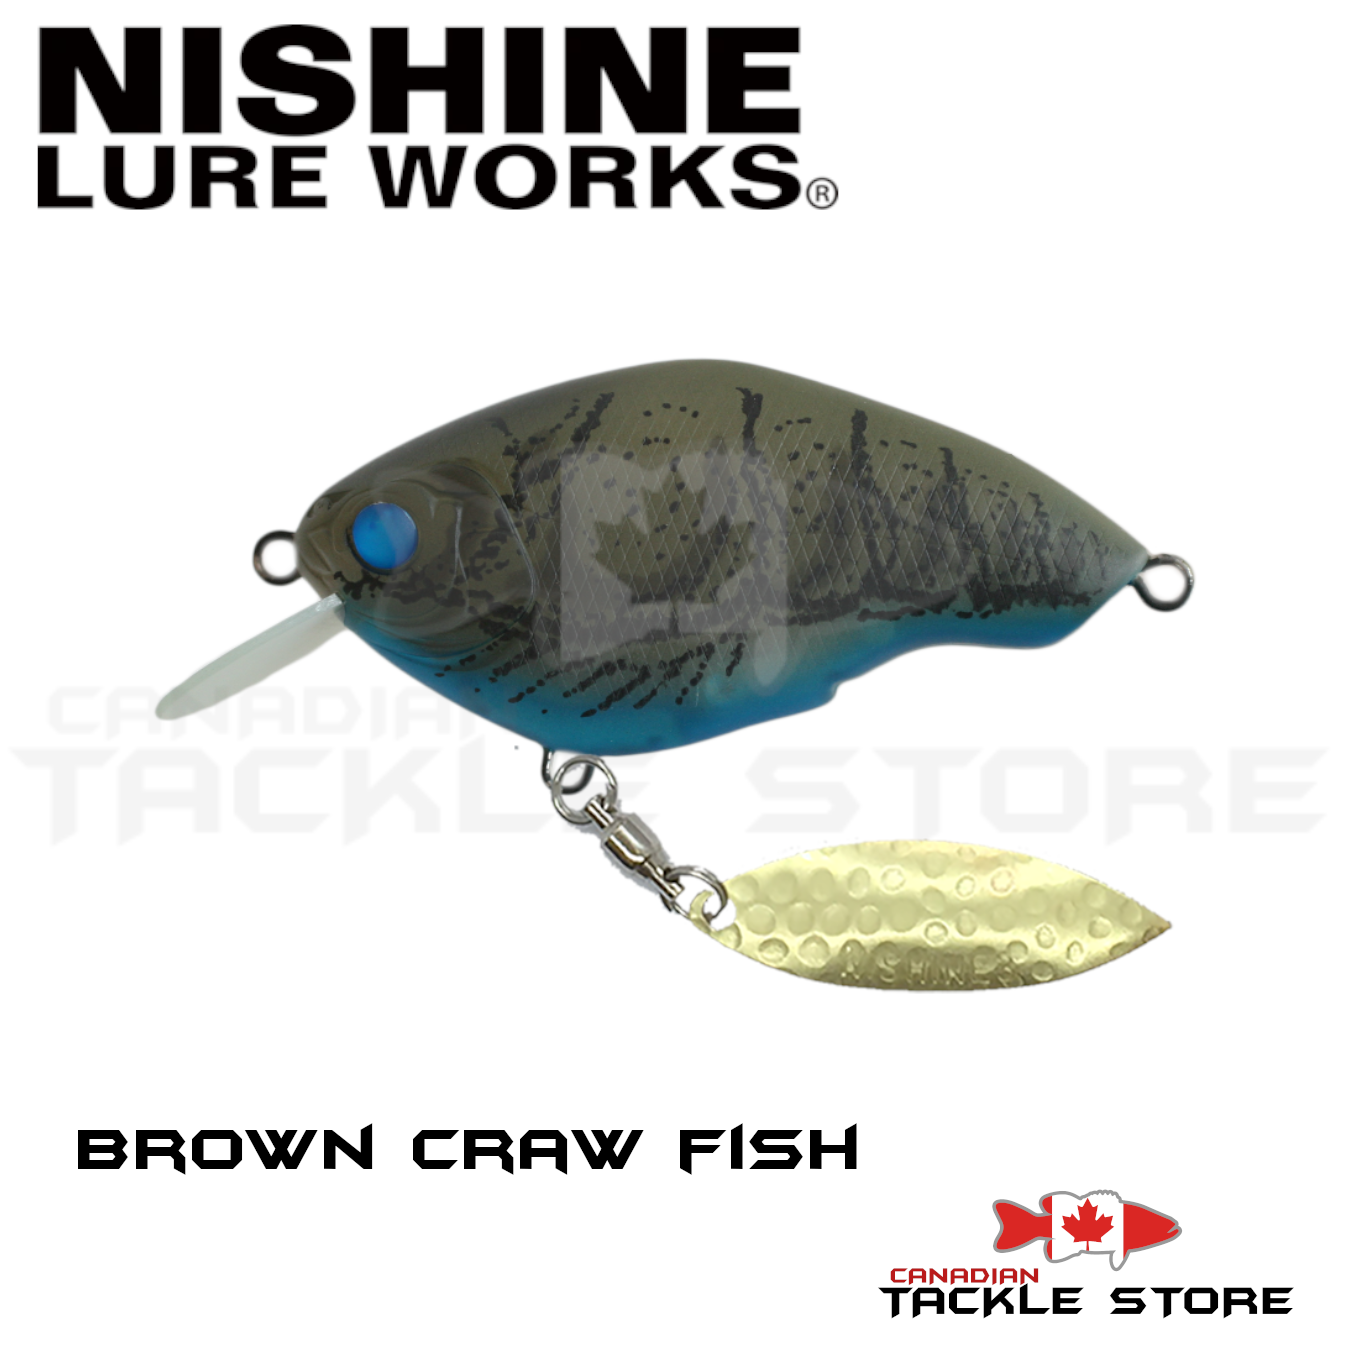 Nishine Lure Works Chippawa RB Blade Model